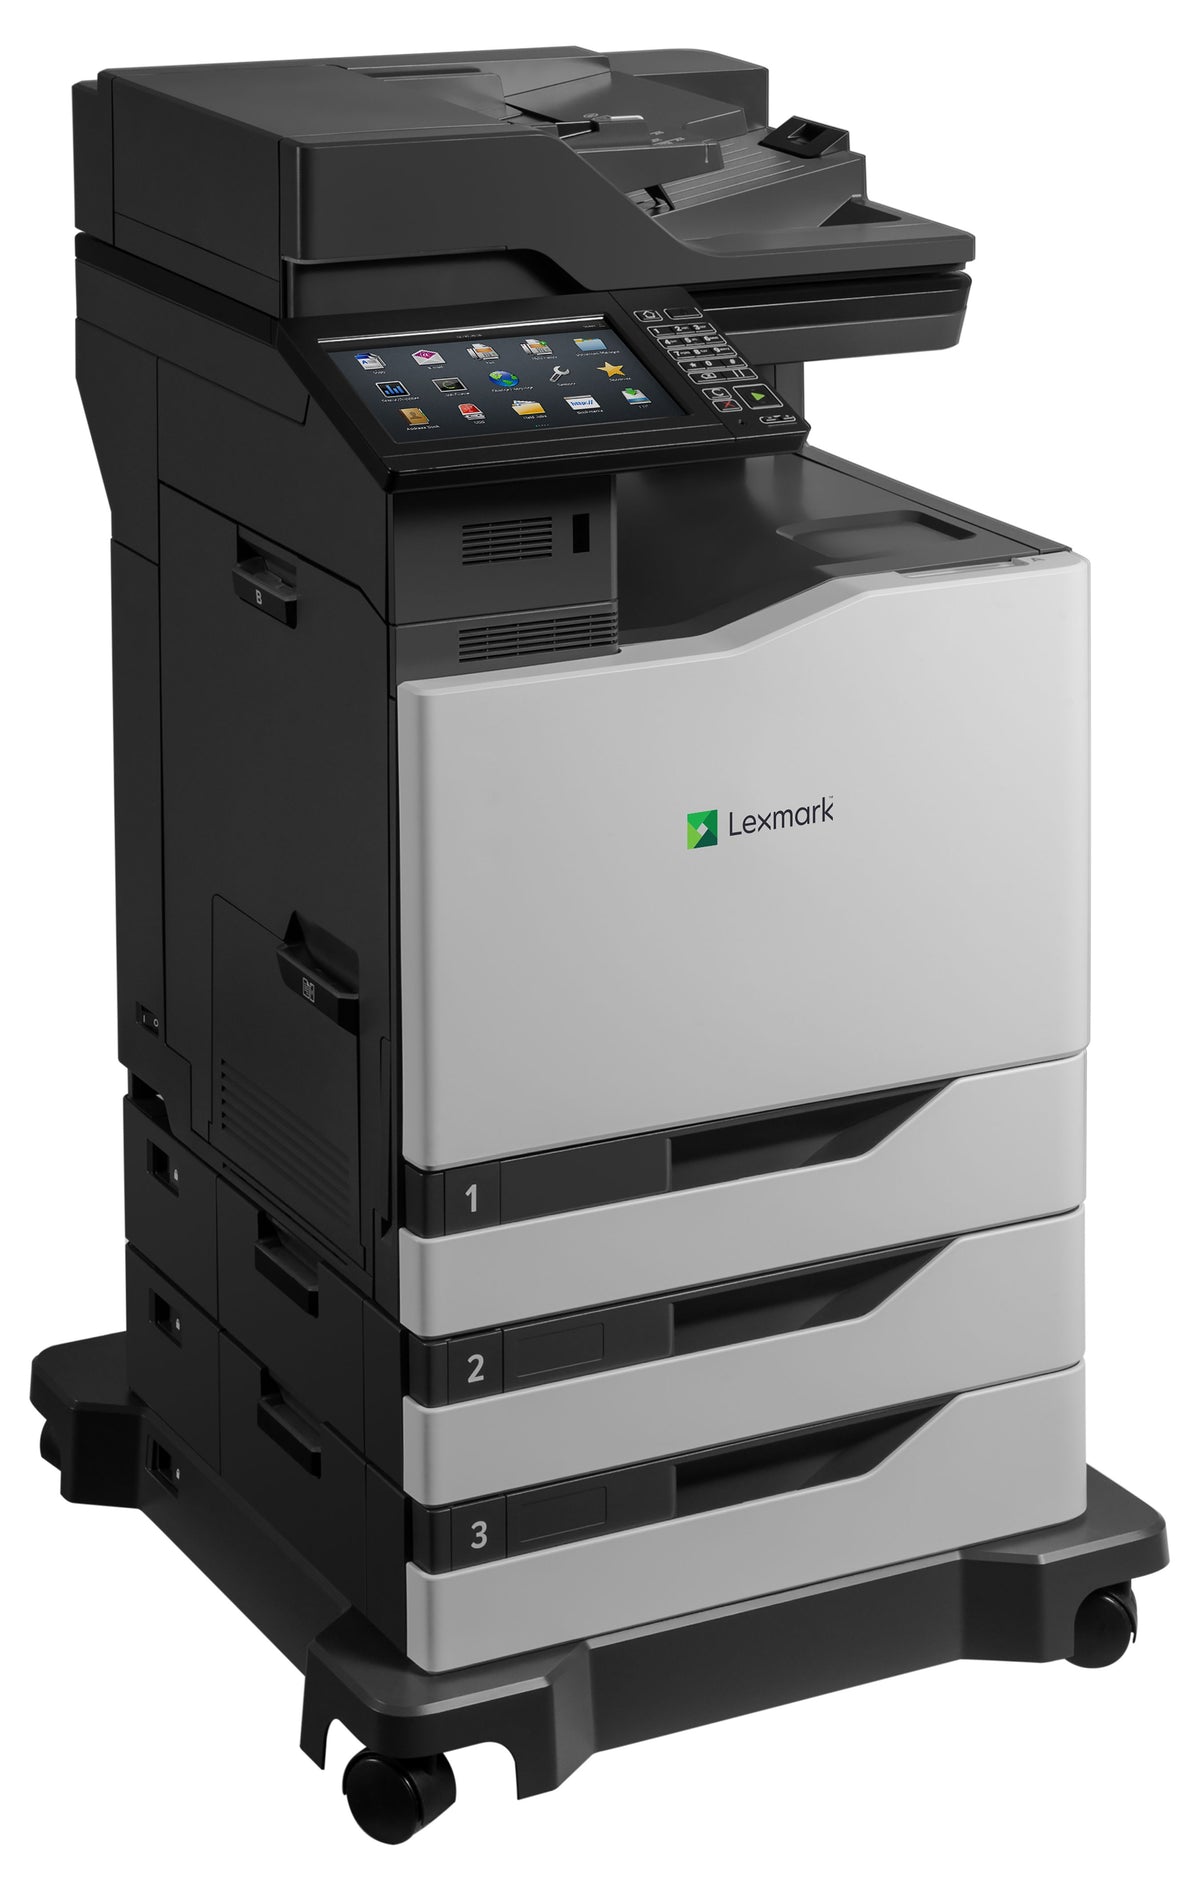 LEXMARK Multifunction Laser Printer CX860dte